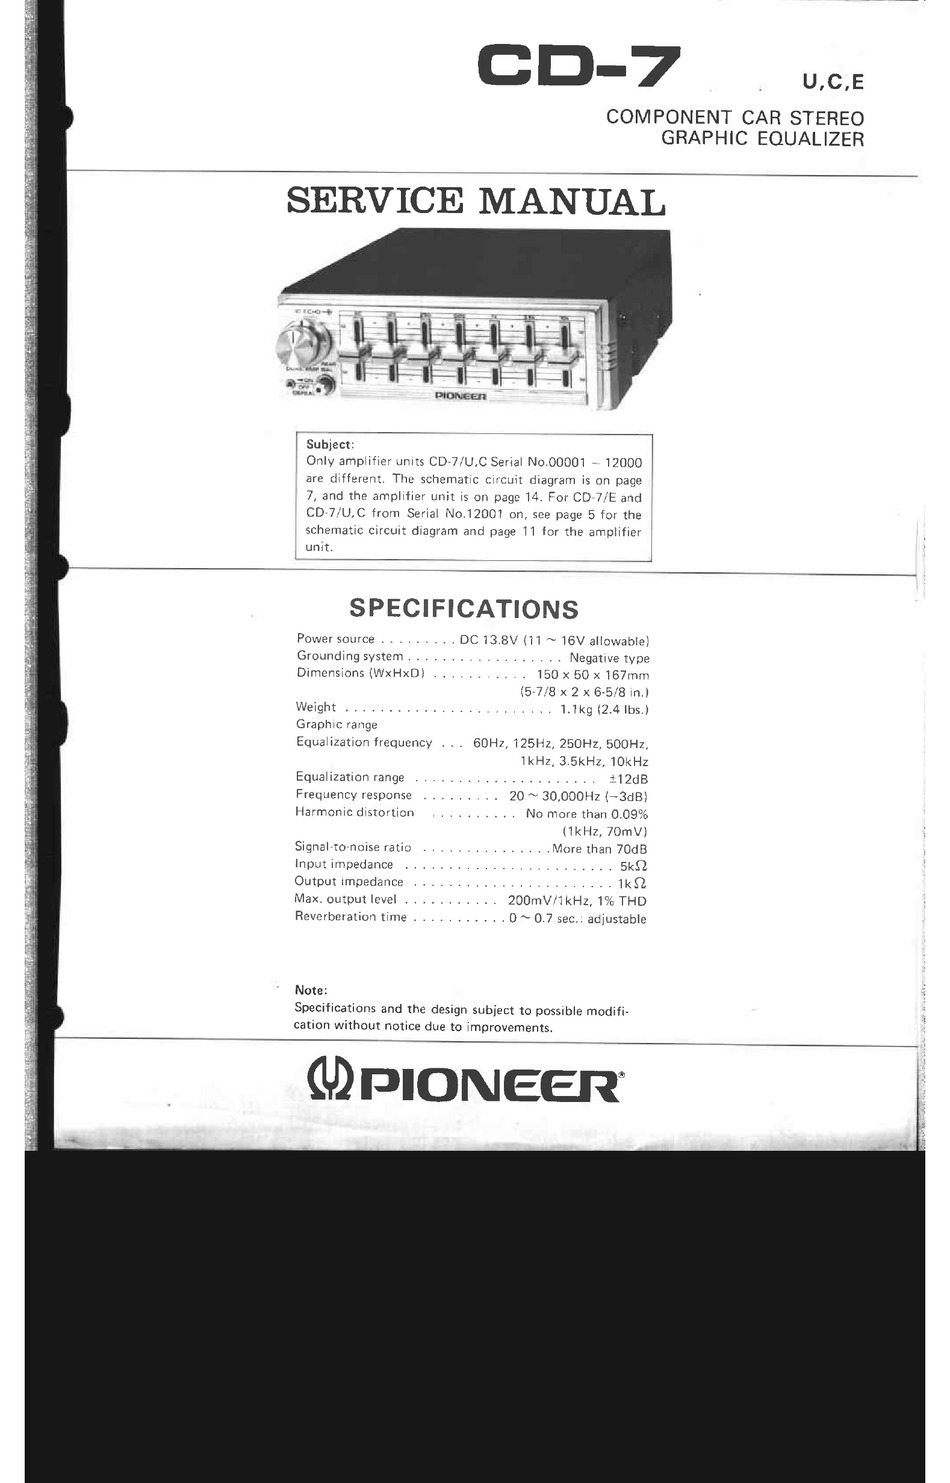 skade Egnet Uplifted PIONEER CD-7 SERVICE MANUAL Pdf Download | ManualsLib